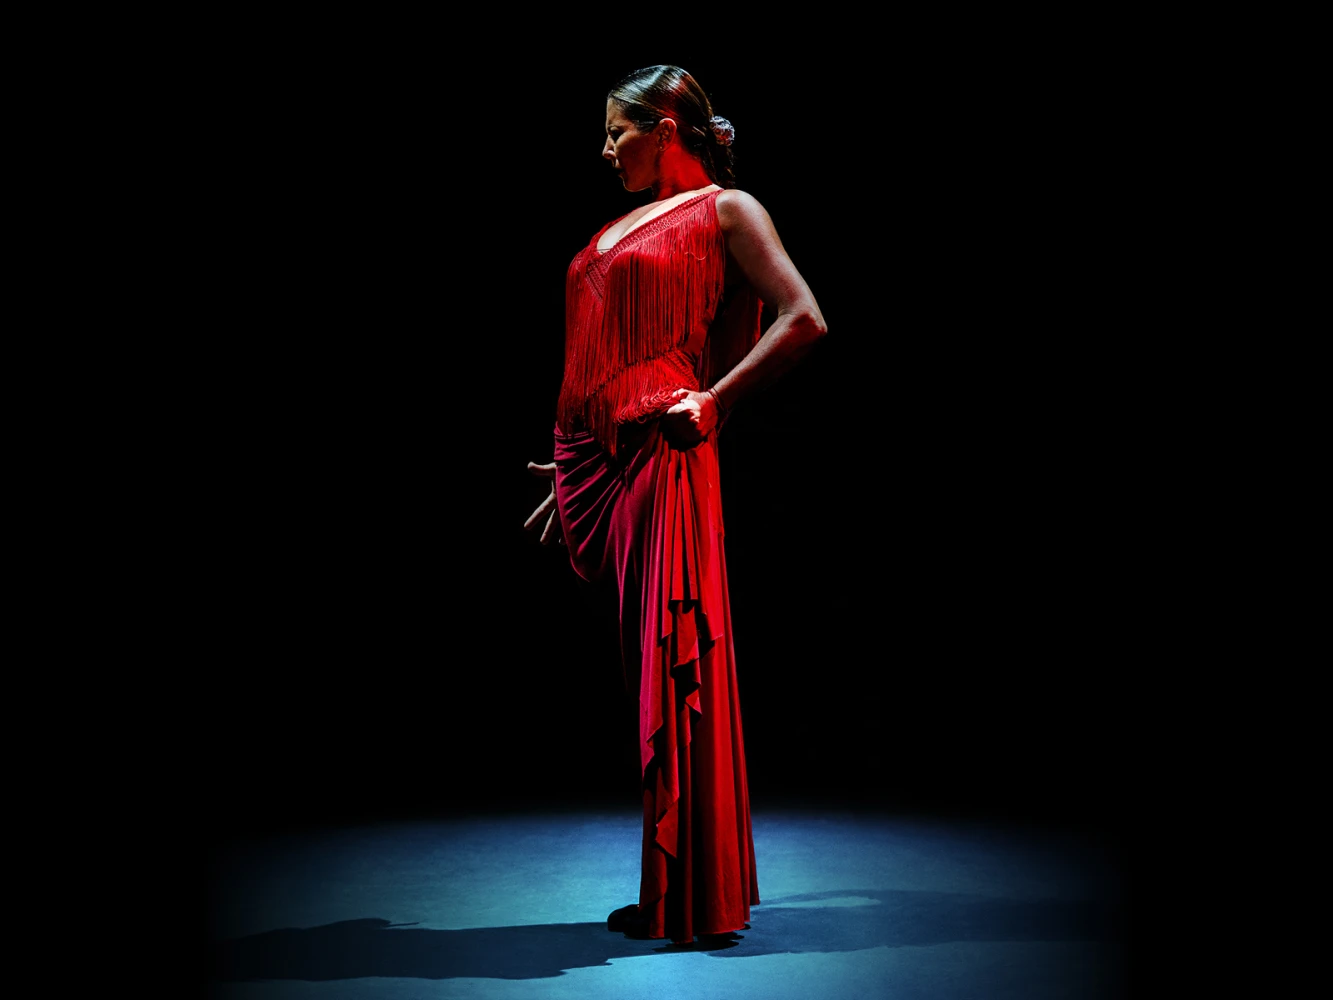 Flamenco Festival: What to expect - 2